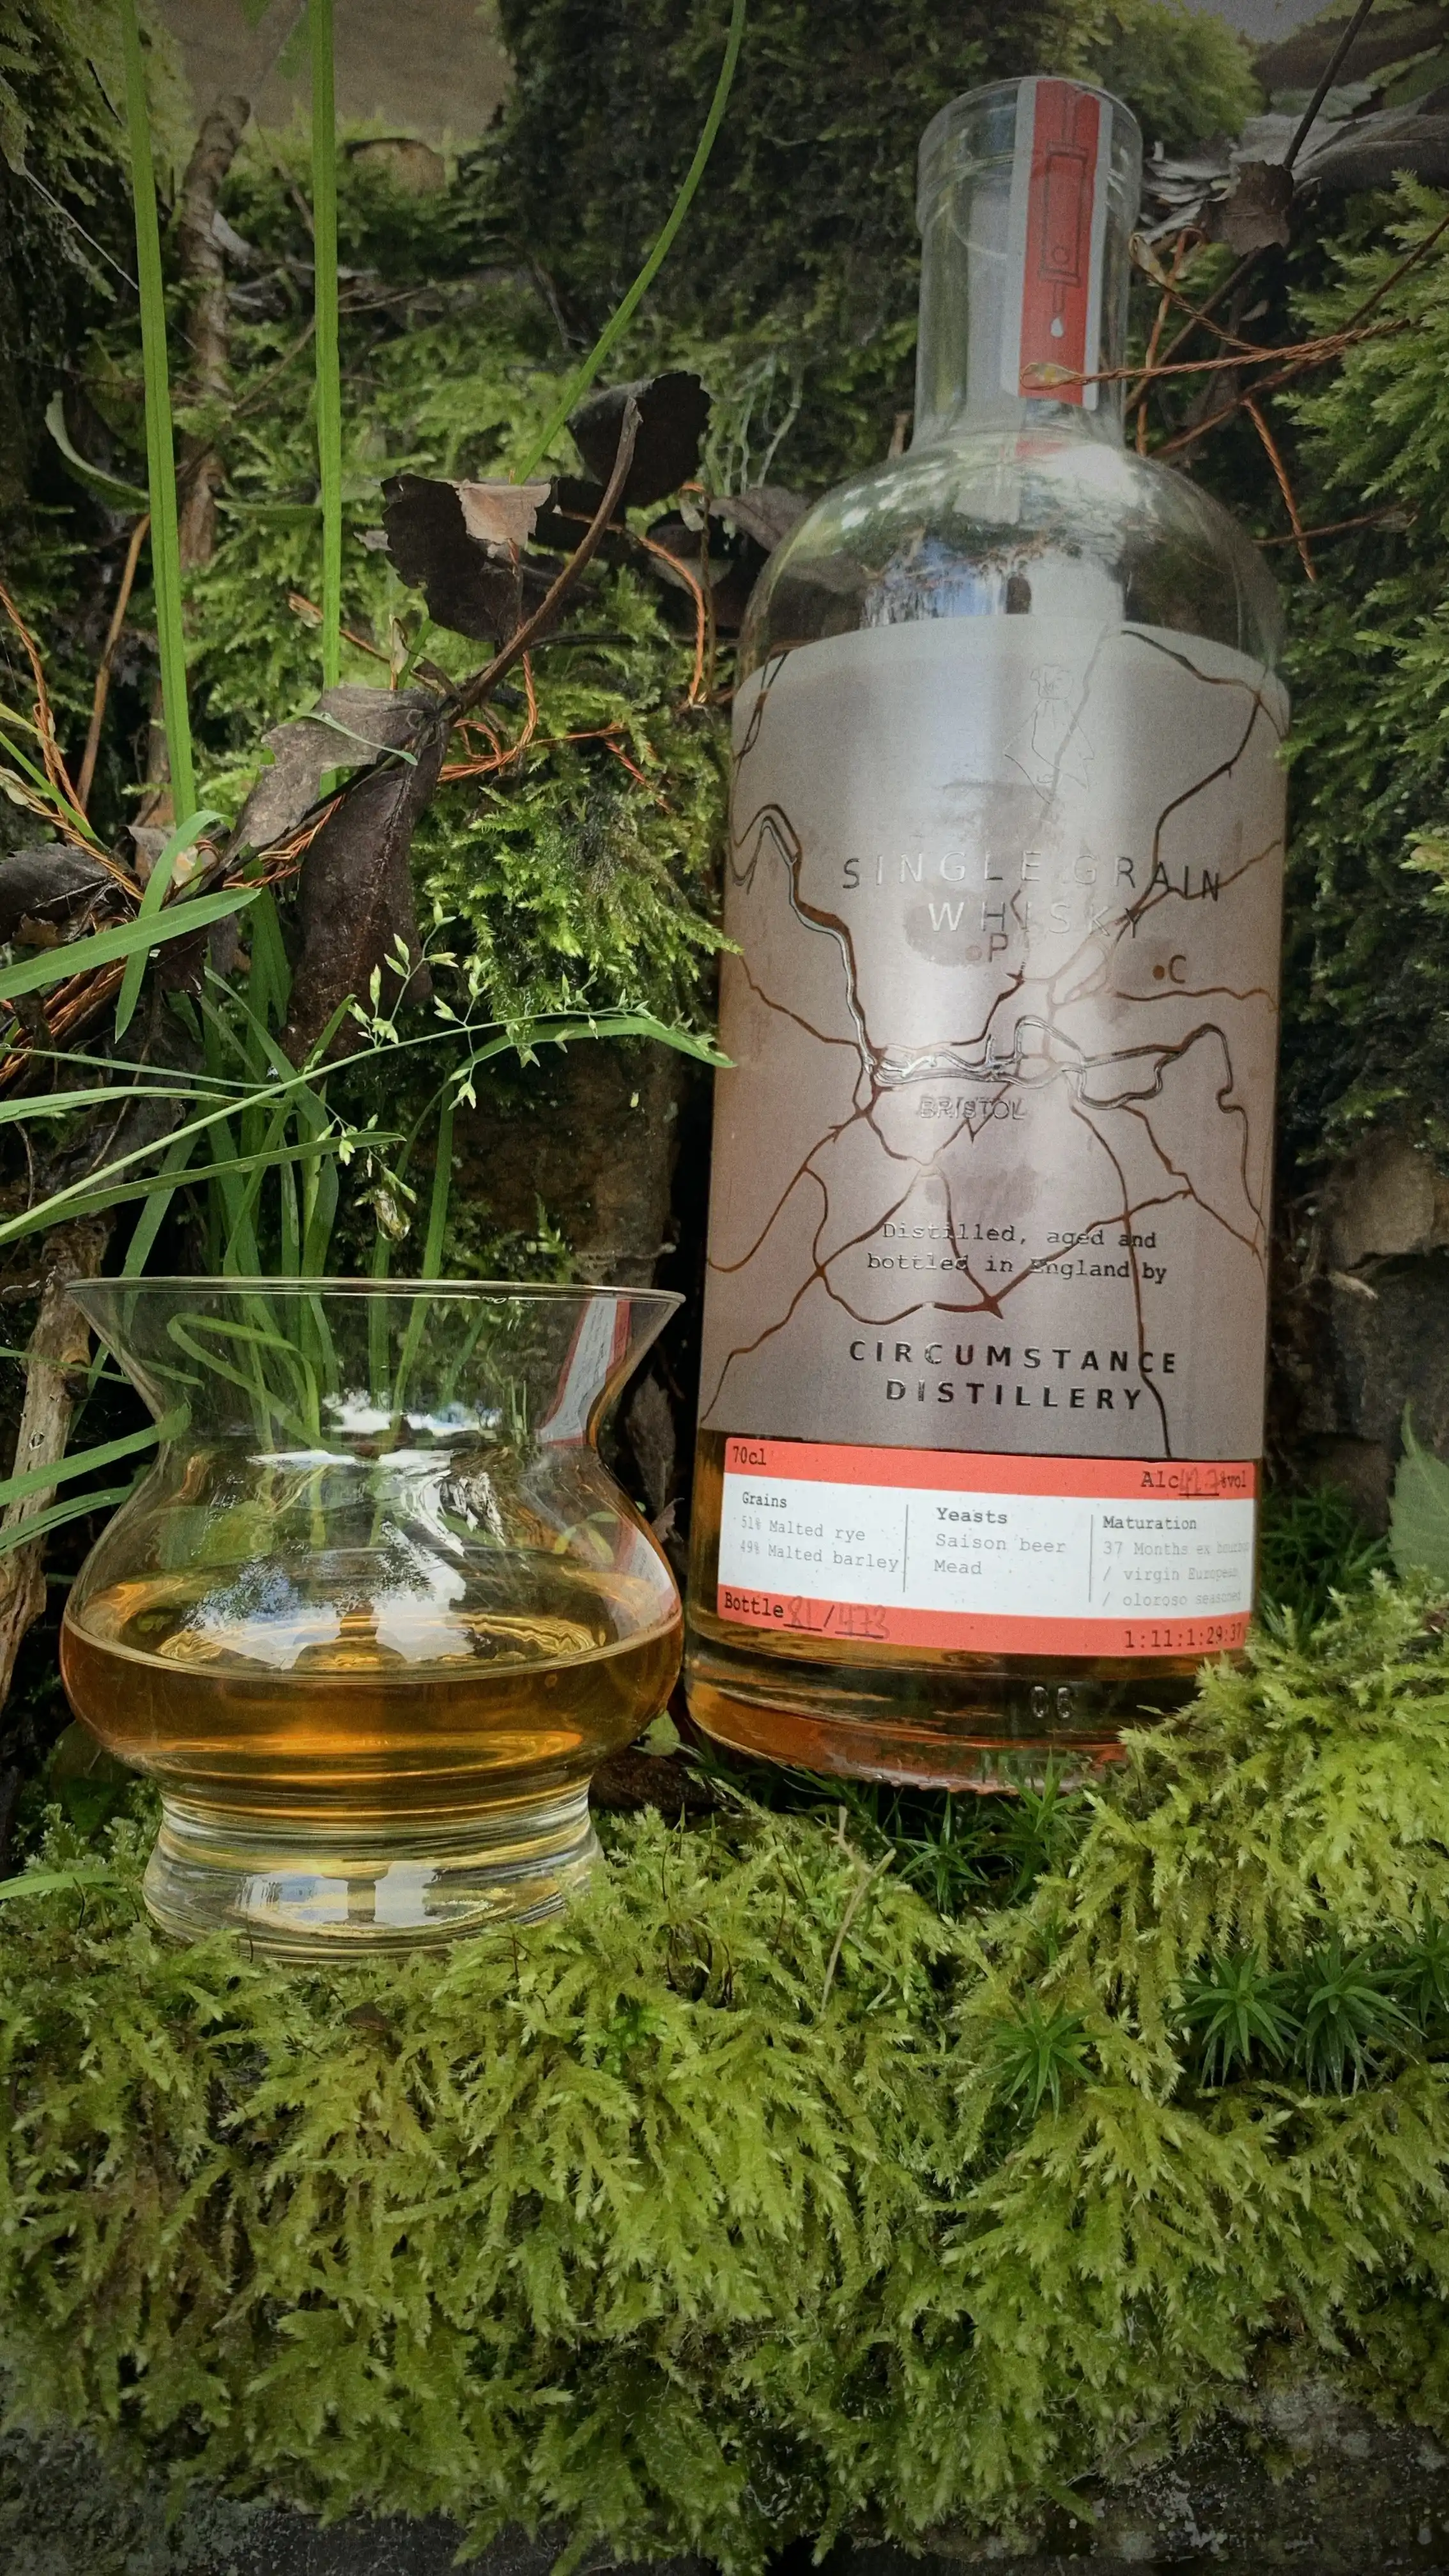 Circumstance Distillery single grain rye whisky